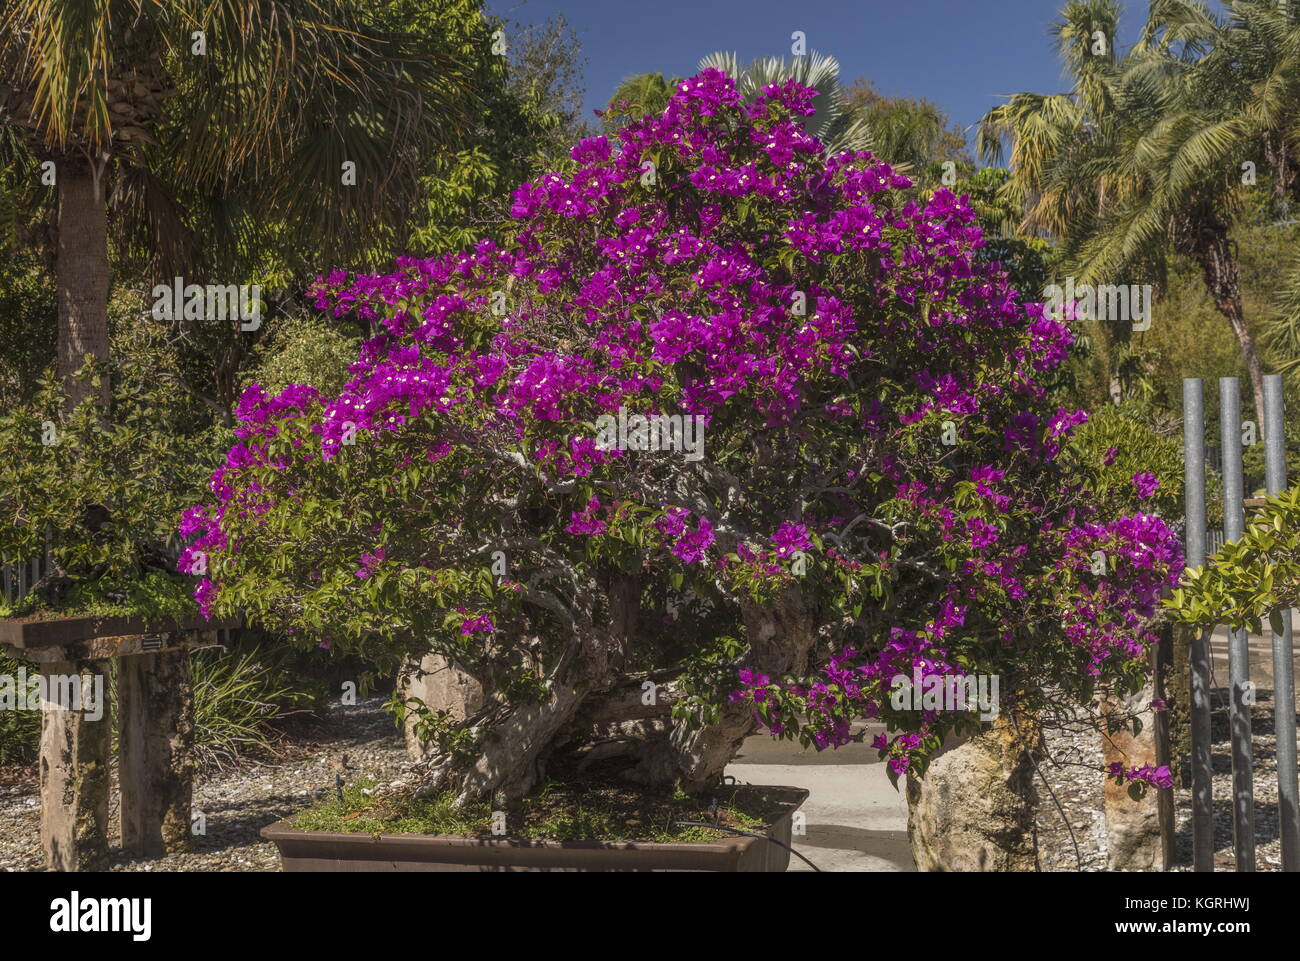 A Bouganvillea bush, managed by the Bonsai technique, at Heathcote Botanic Gardens, Fort Pierce, Florida. Stock Photo